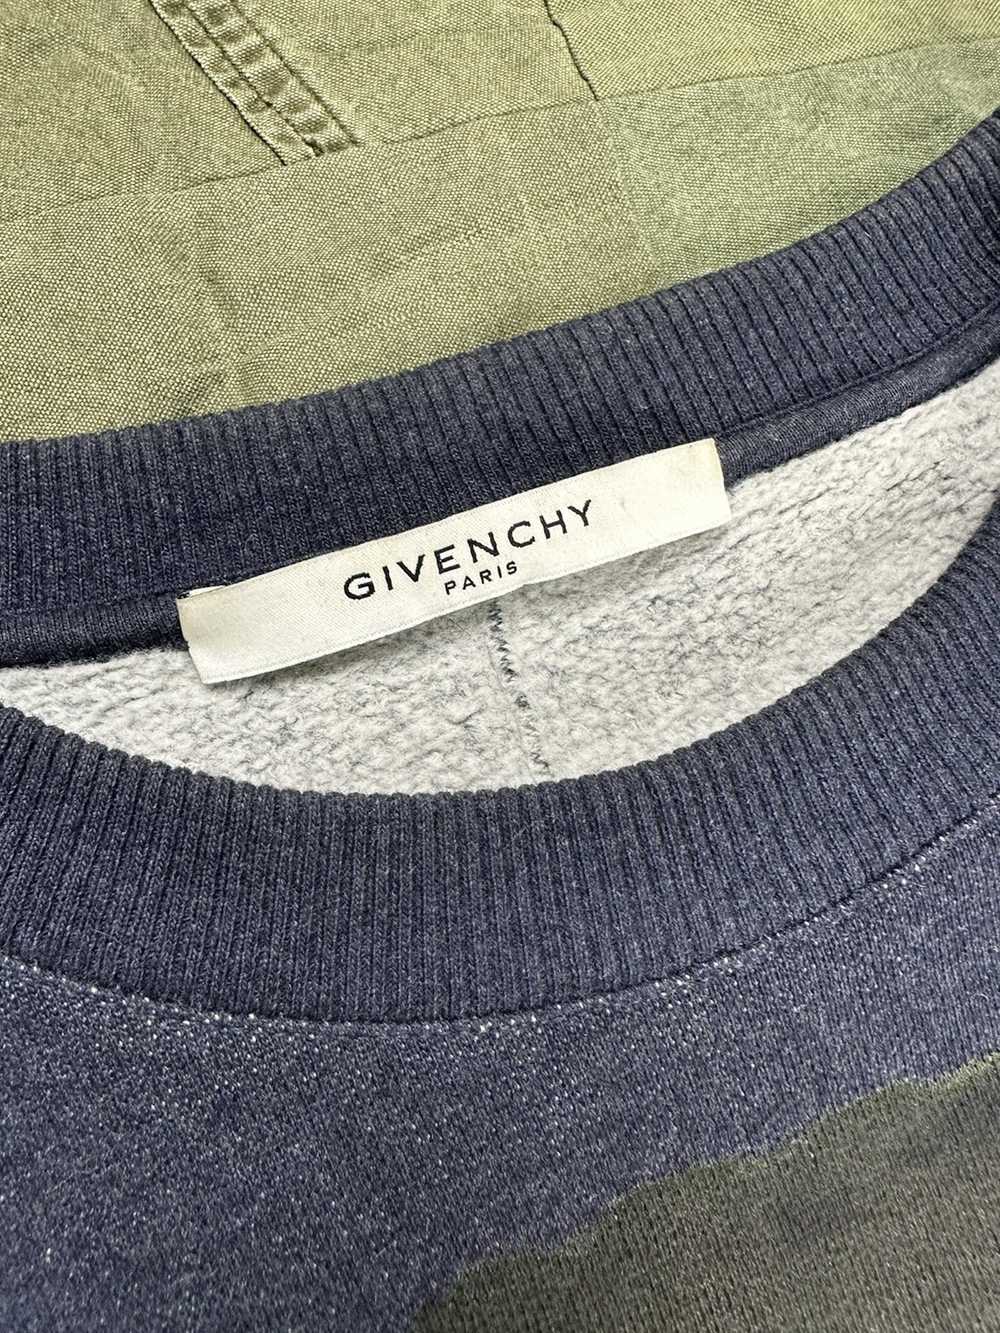 Givenchy Rottweiler Sweatshirt - image 3